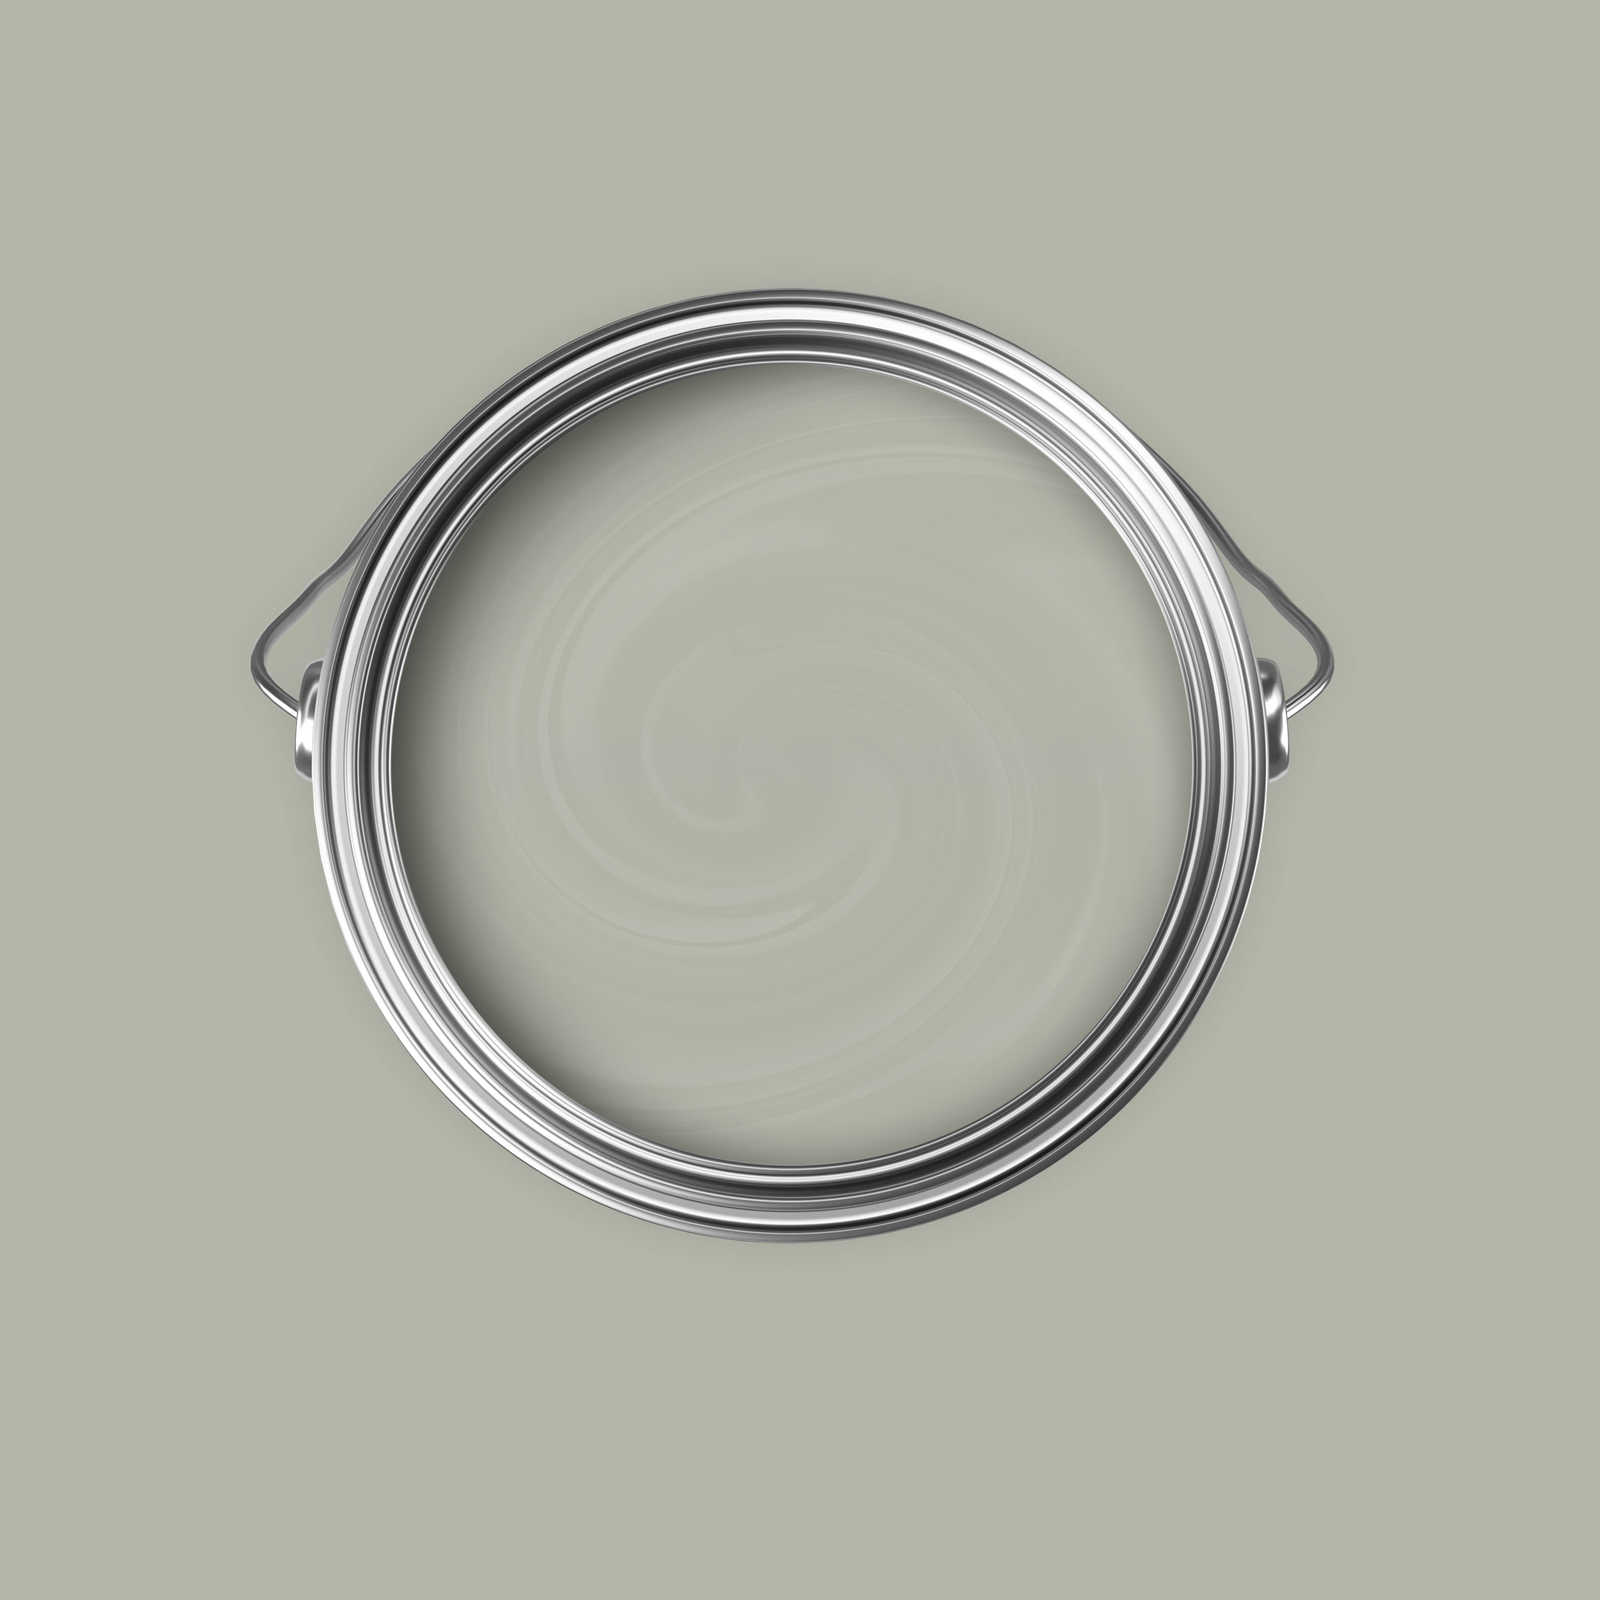             Premium Wandfarbe sanftes Olivgrün »Talented calm taupe« NW705 – 5 Liter
        